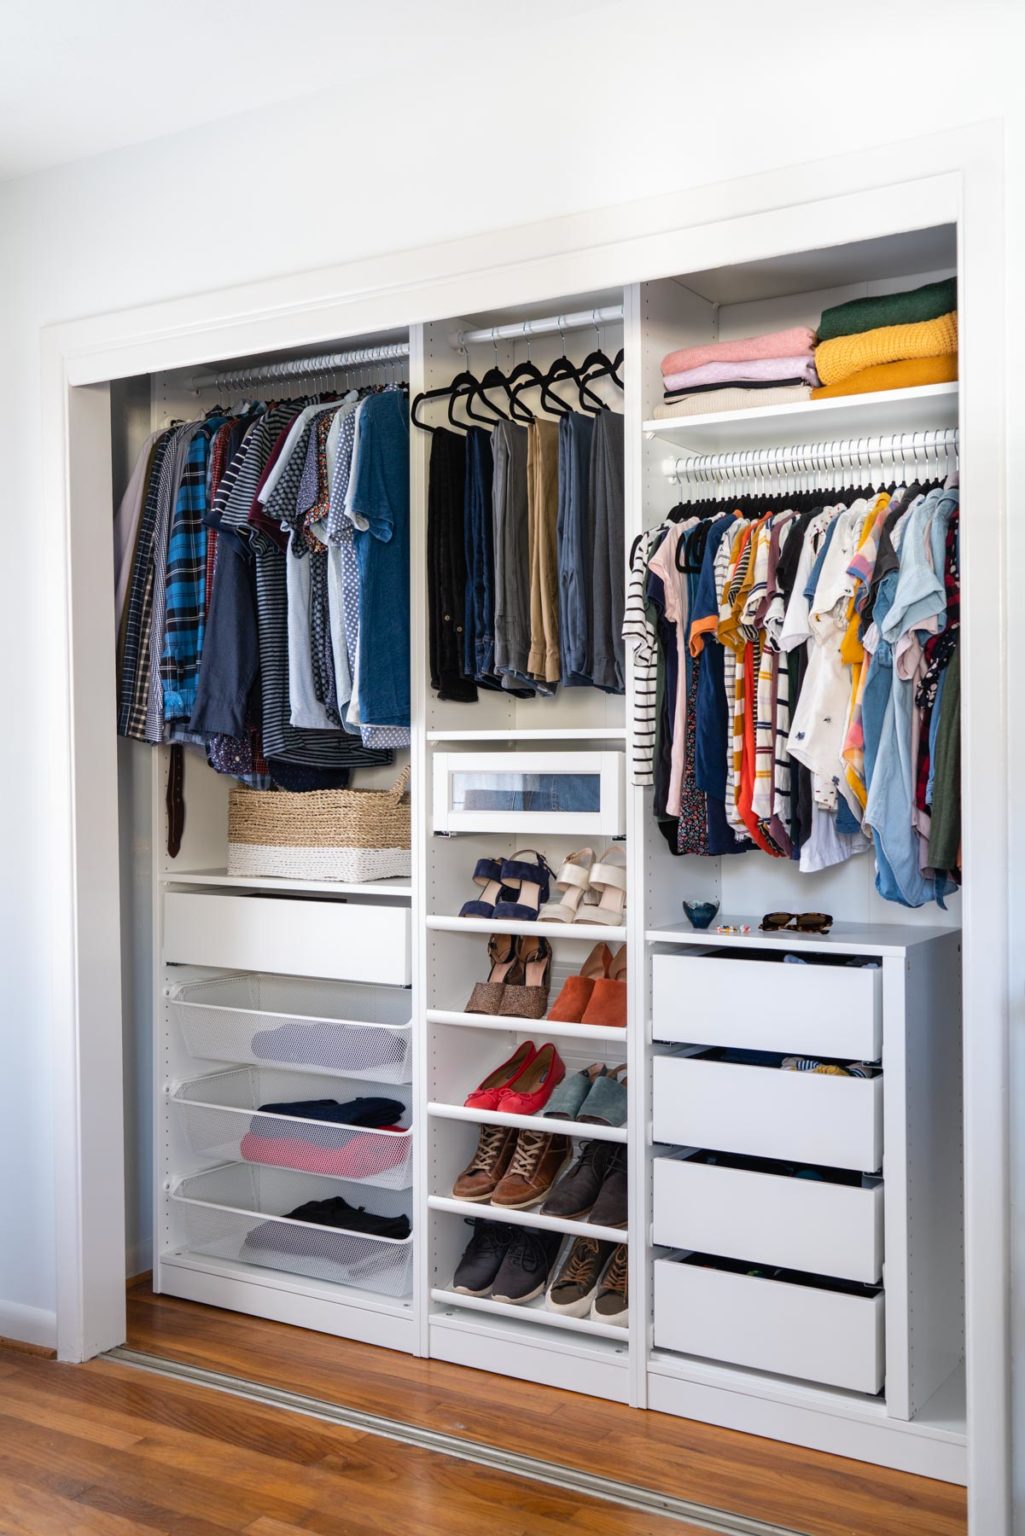 IKEA PAX Wardrobe Ideas for Your Dream Closet - Abby Murphy